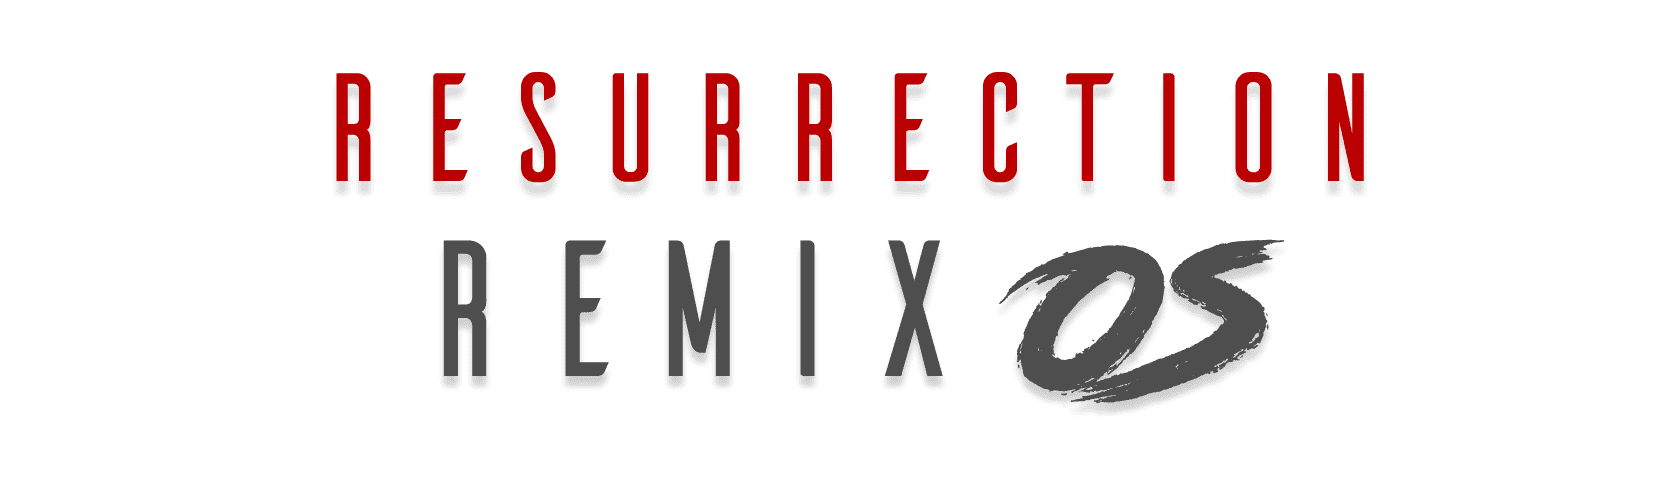 resurrection-remix-os